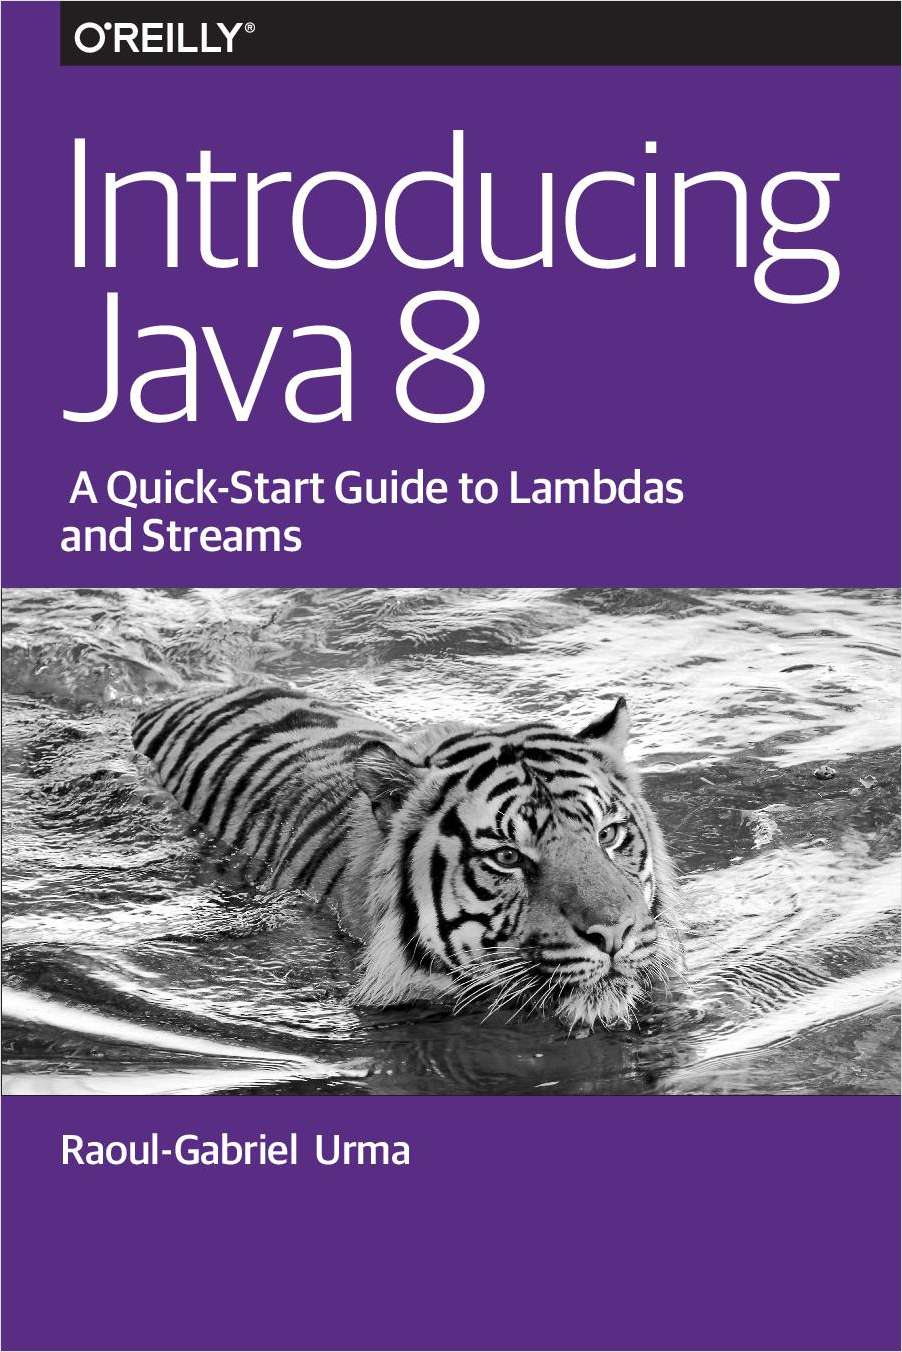 Introducing Java 8